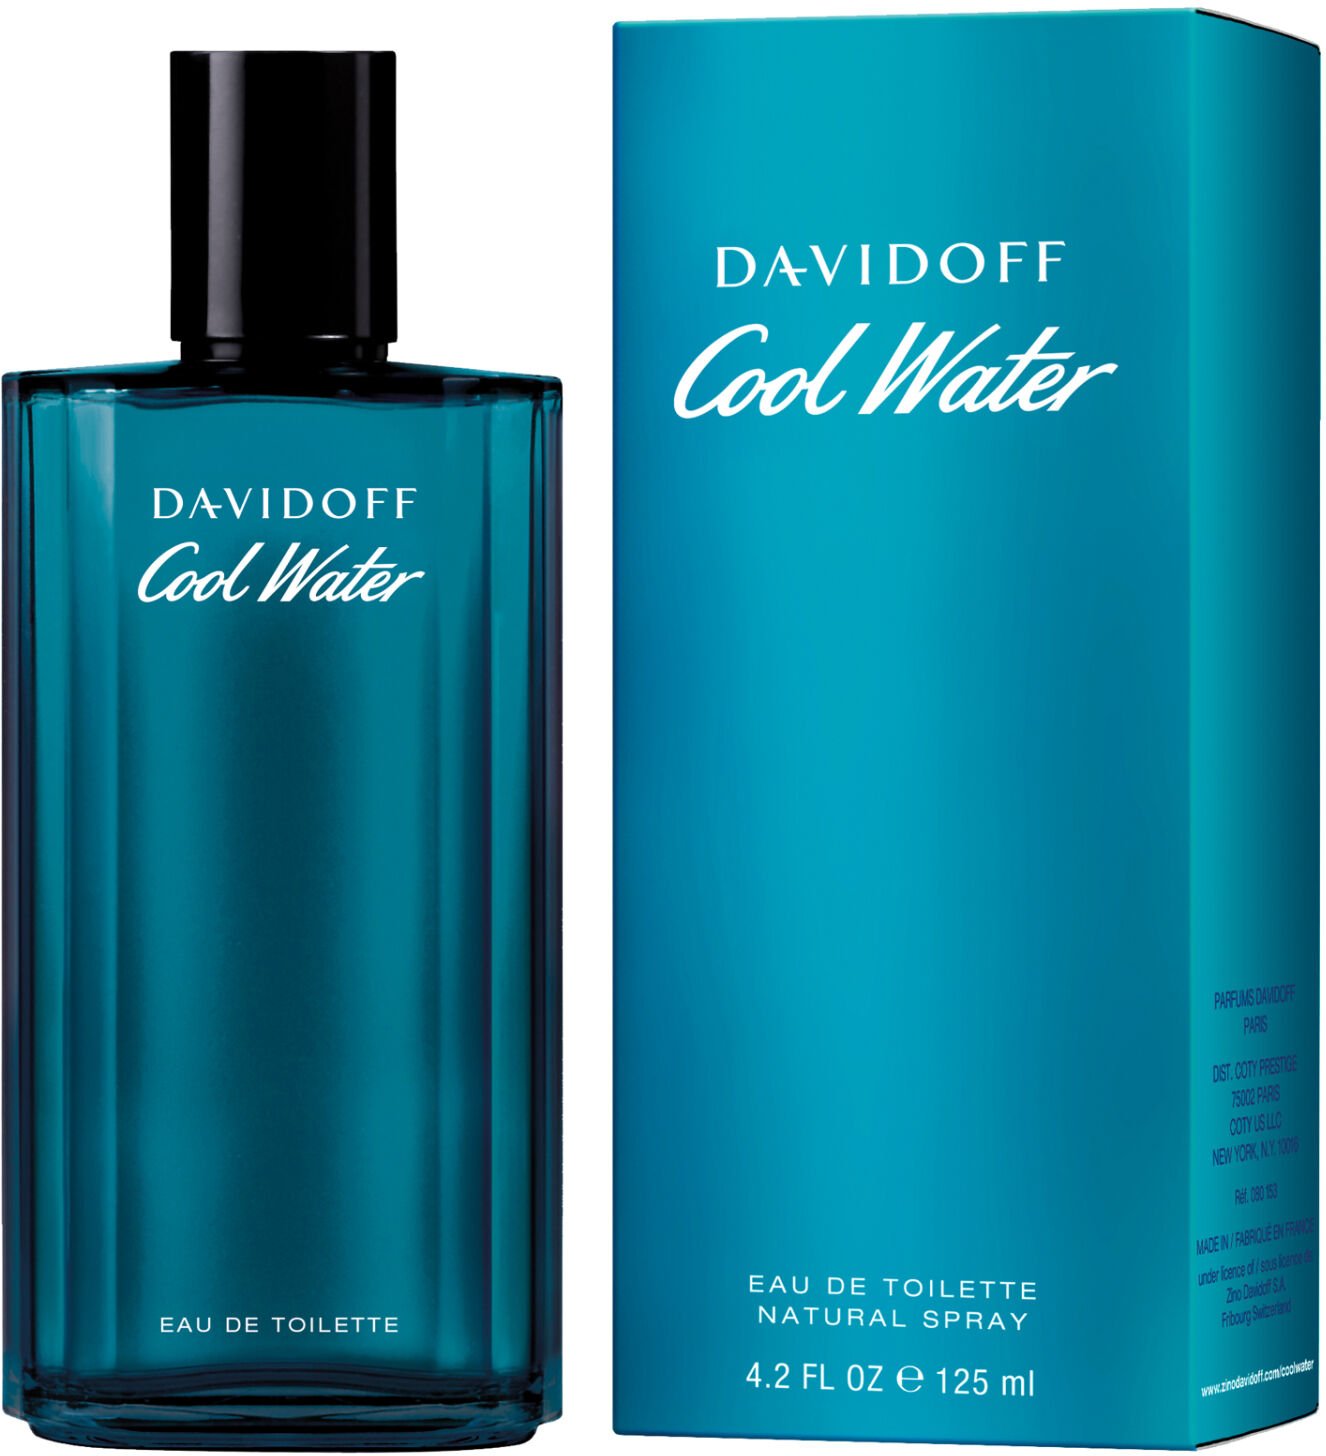 Davidoff Cool Water Man - EDT 75 ml